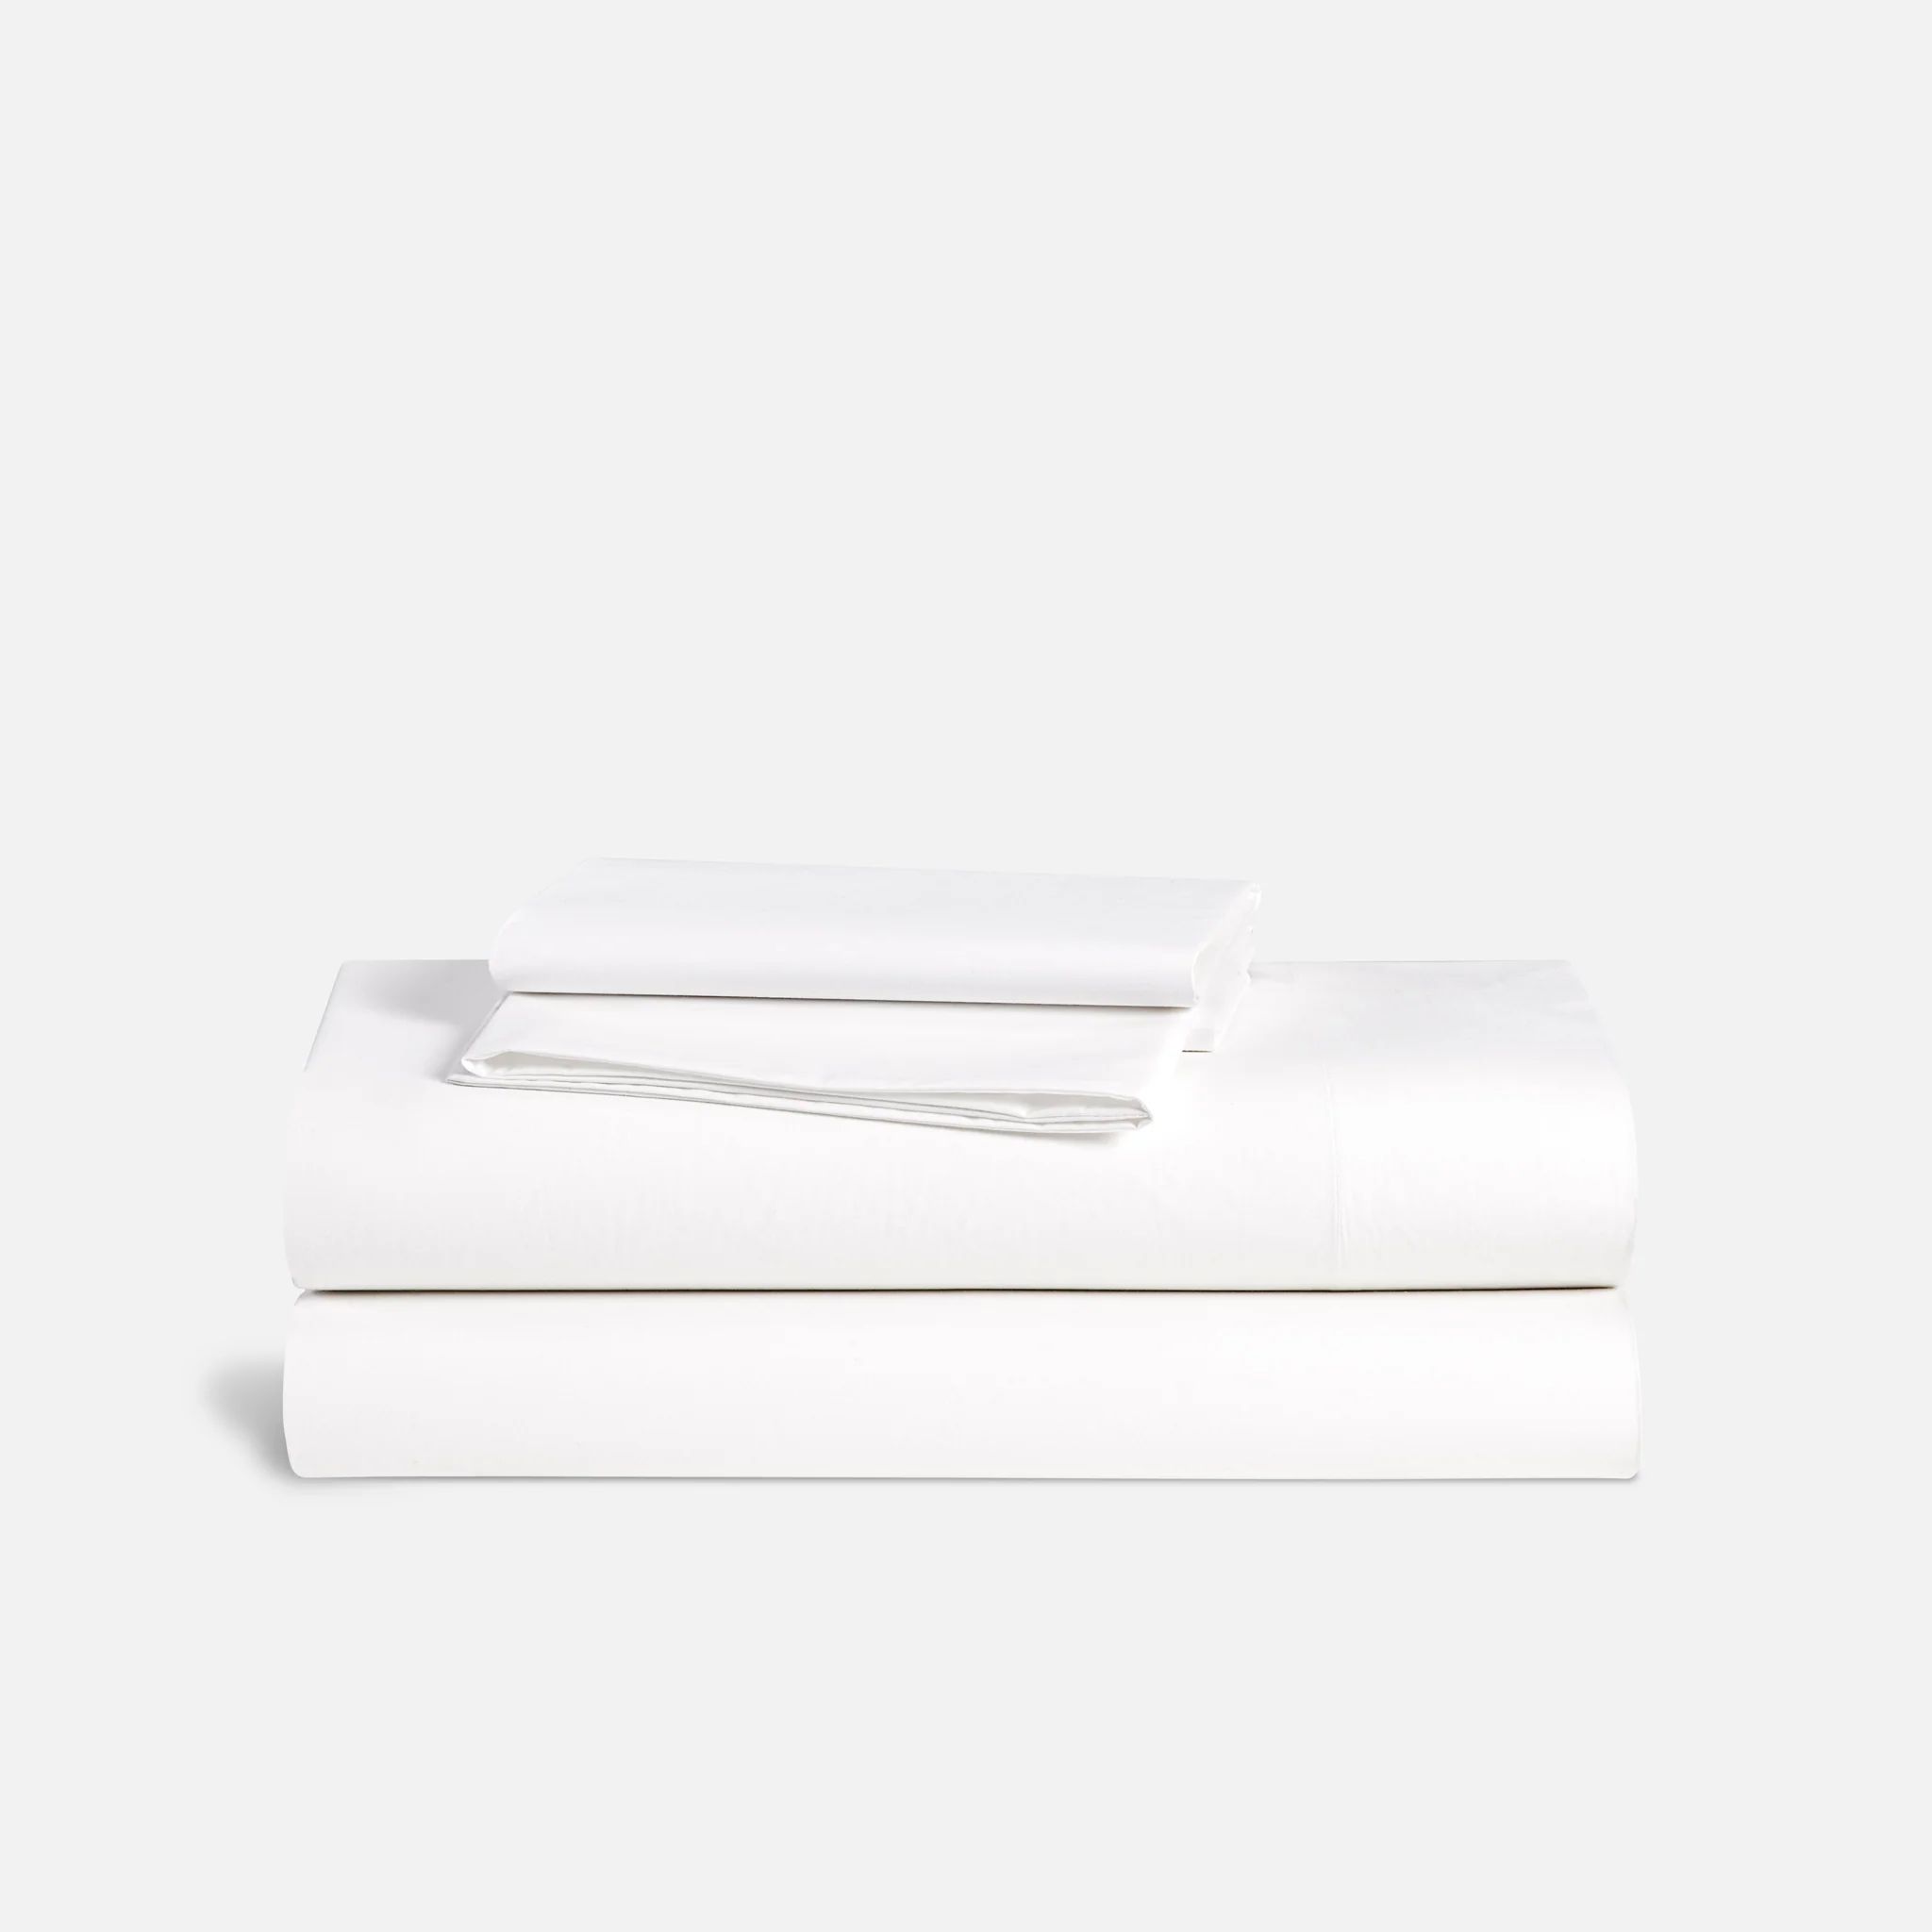 Brooklinen Luxe Sateen Core Sheet Set size Queen in Solid White | Brooklinen